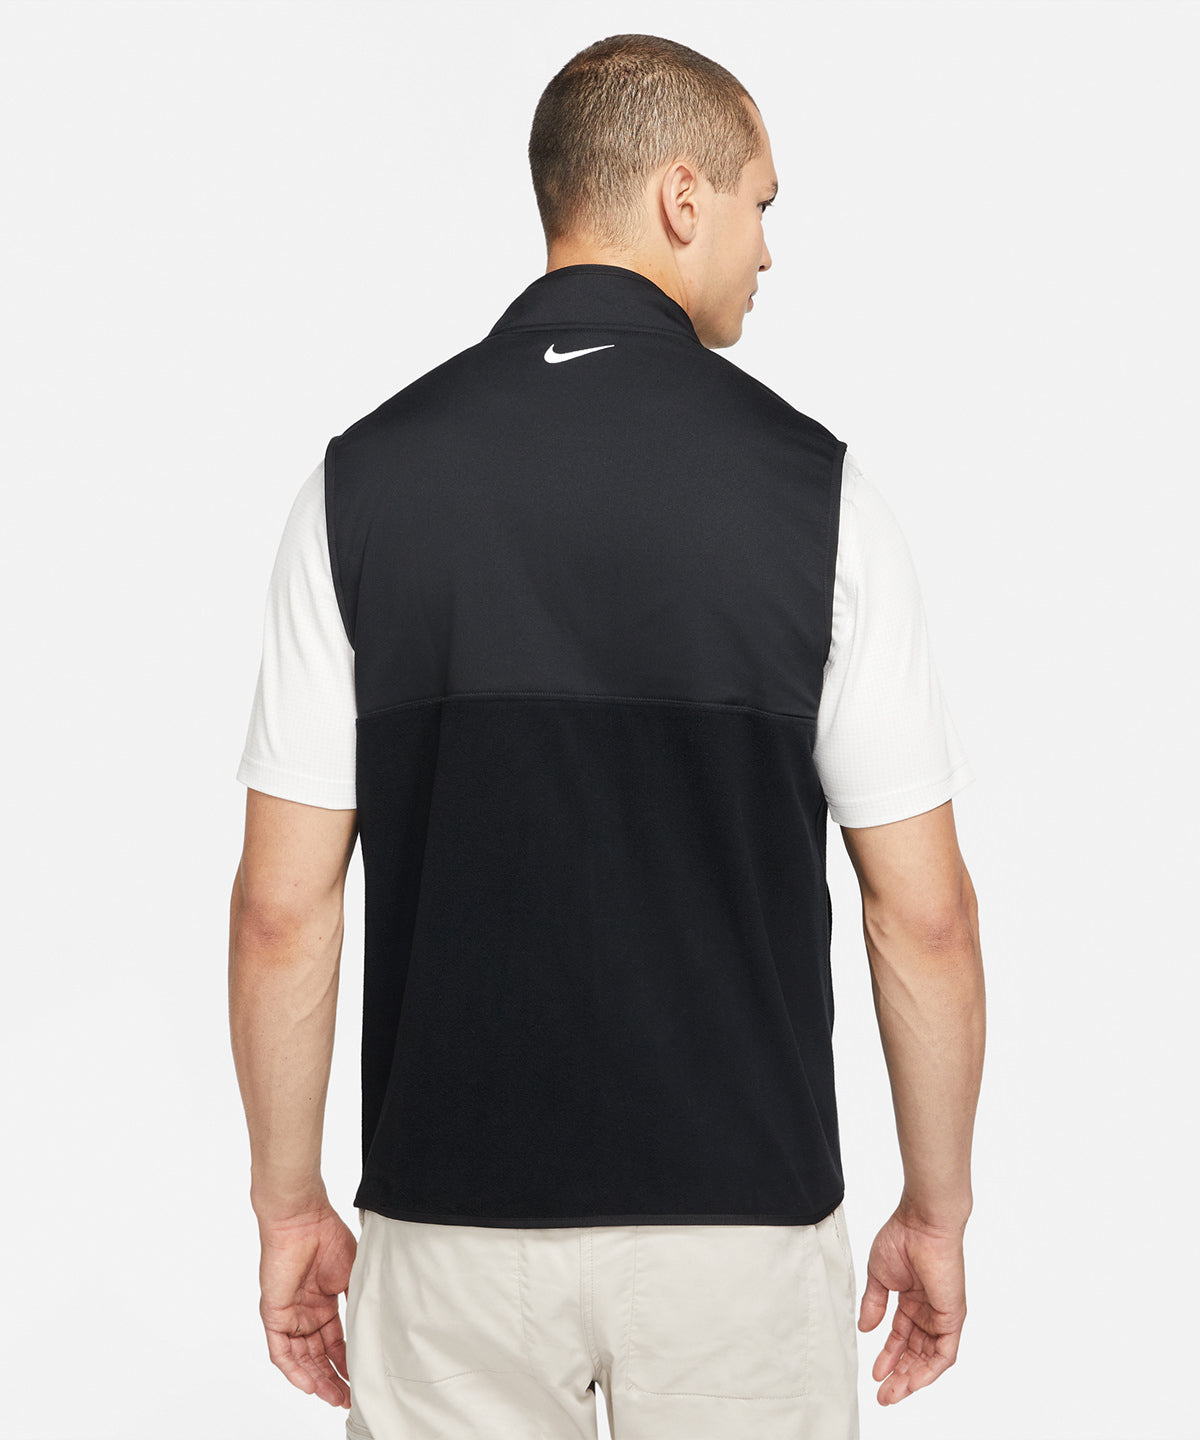 Nike Victory vest